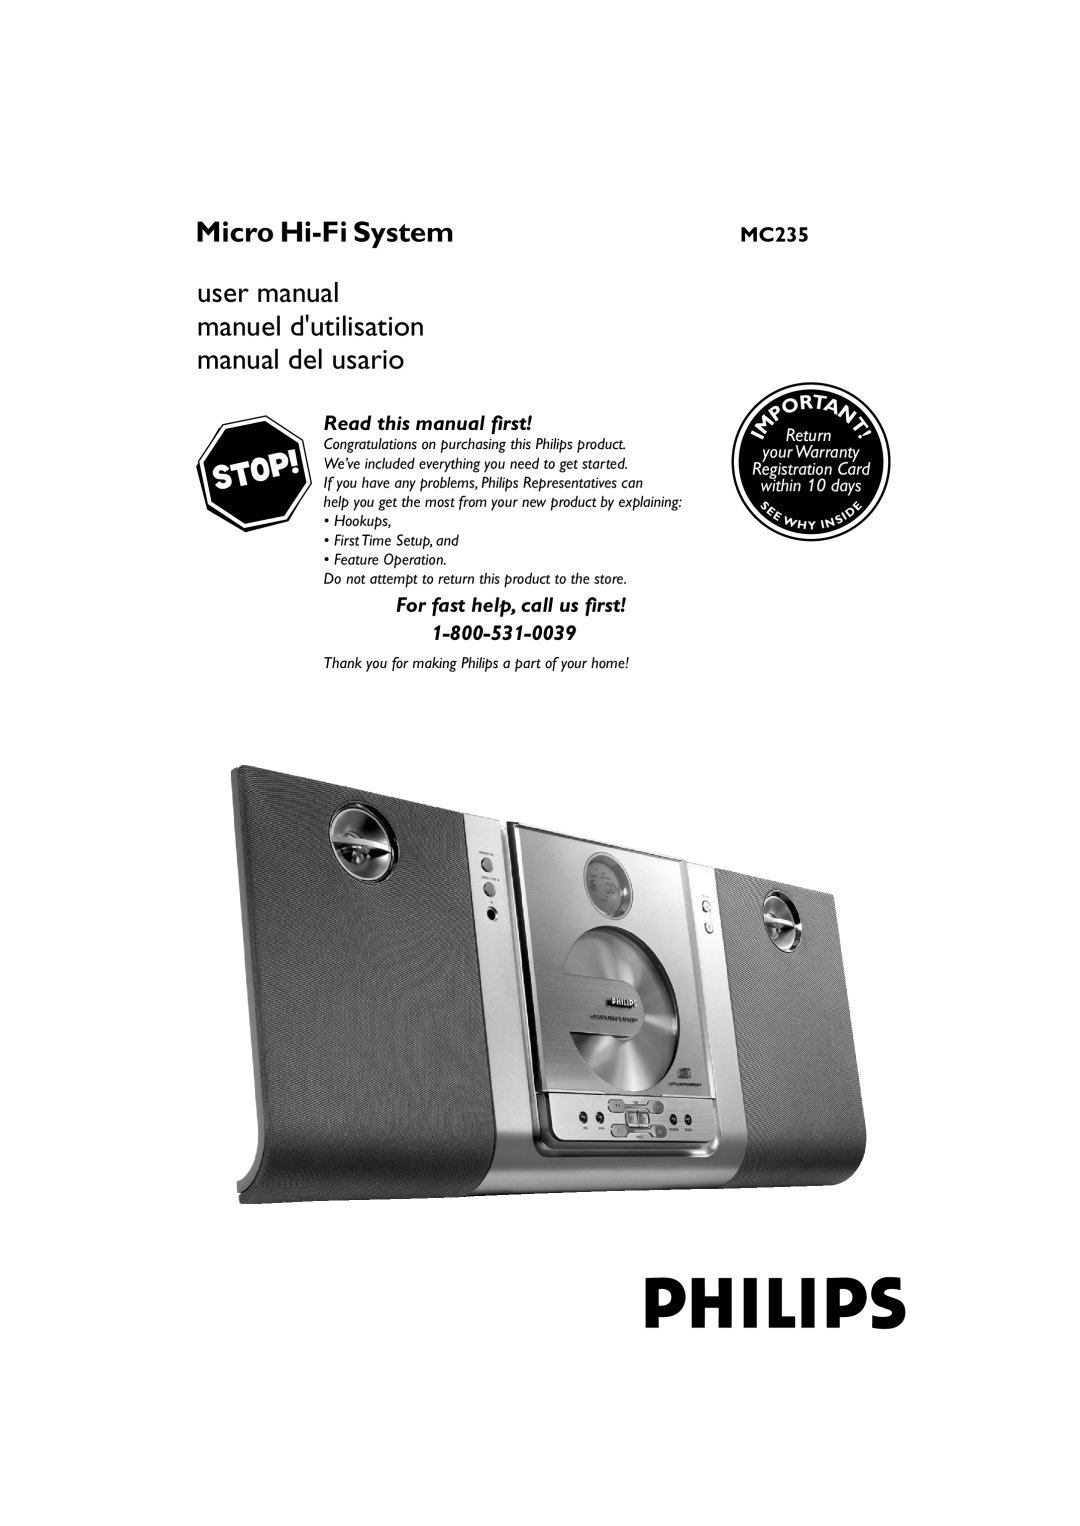 Philips user manual Micro Hi-FiSystem, MC230 MC235, Âá¯Âèú›‰Èô ¯Ú‹Ûë˜, manuel dutilisation, brugermanual, käyttöoppaita 